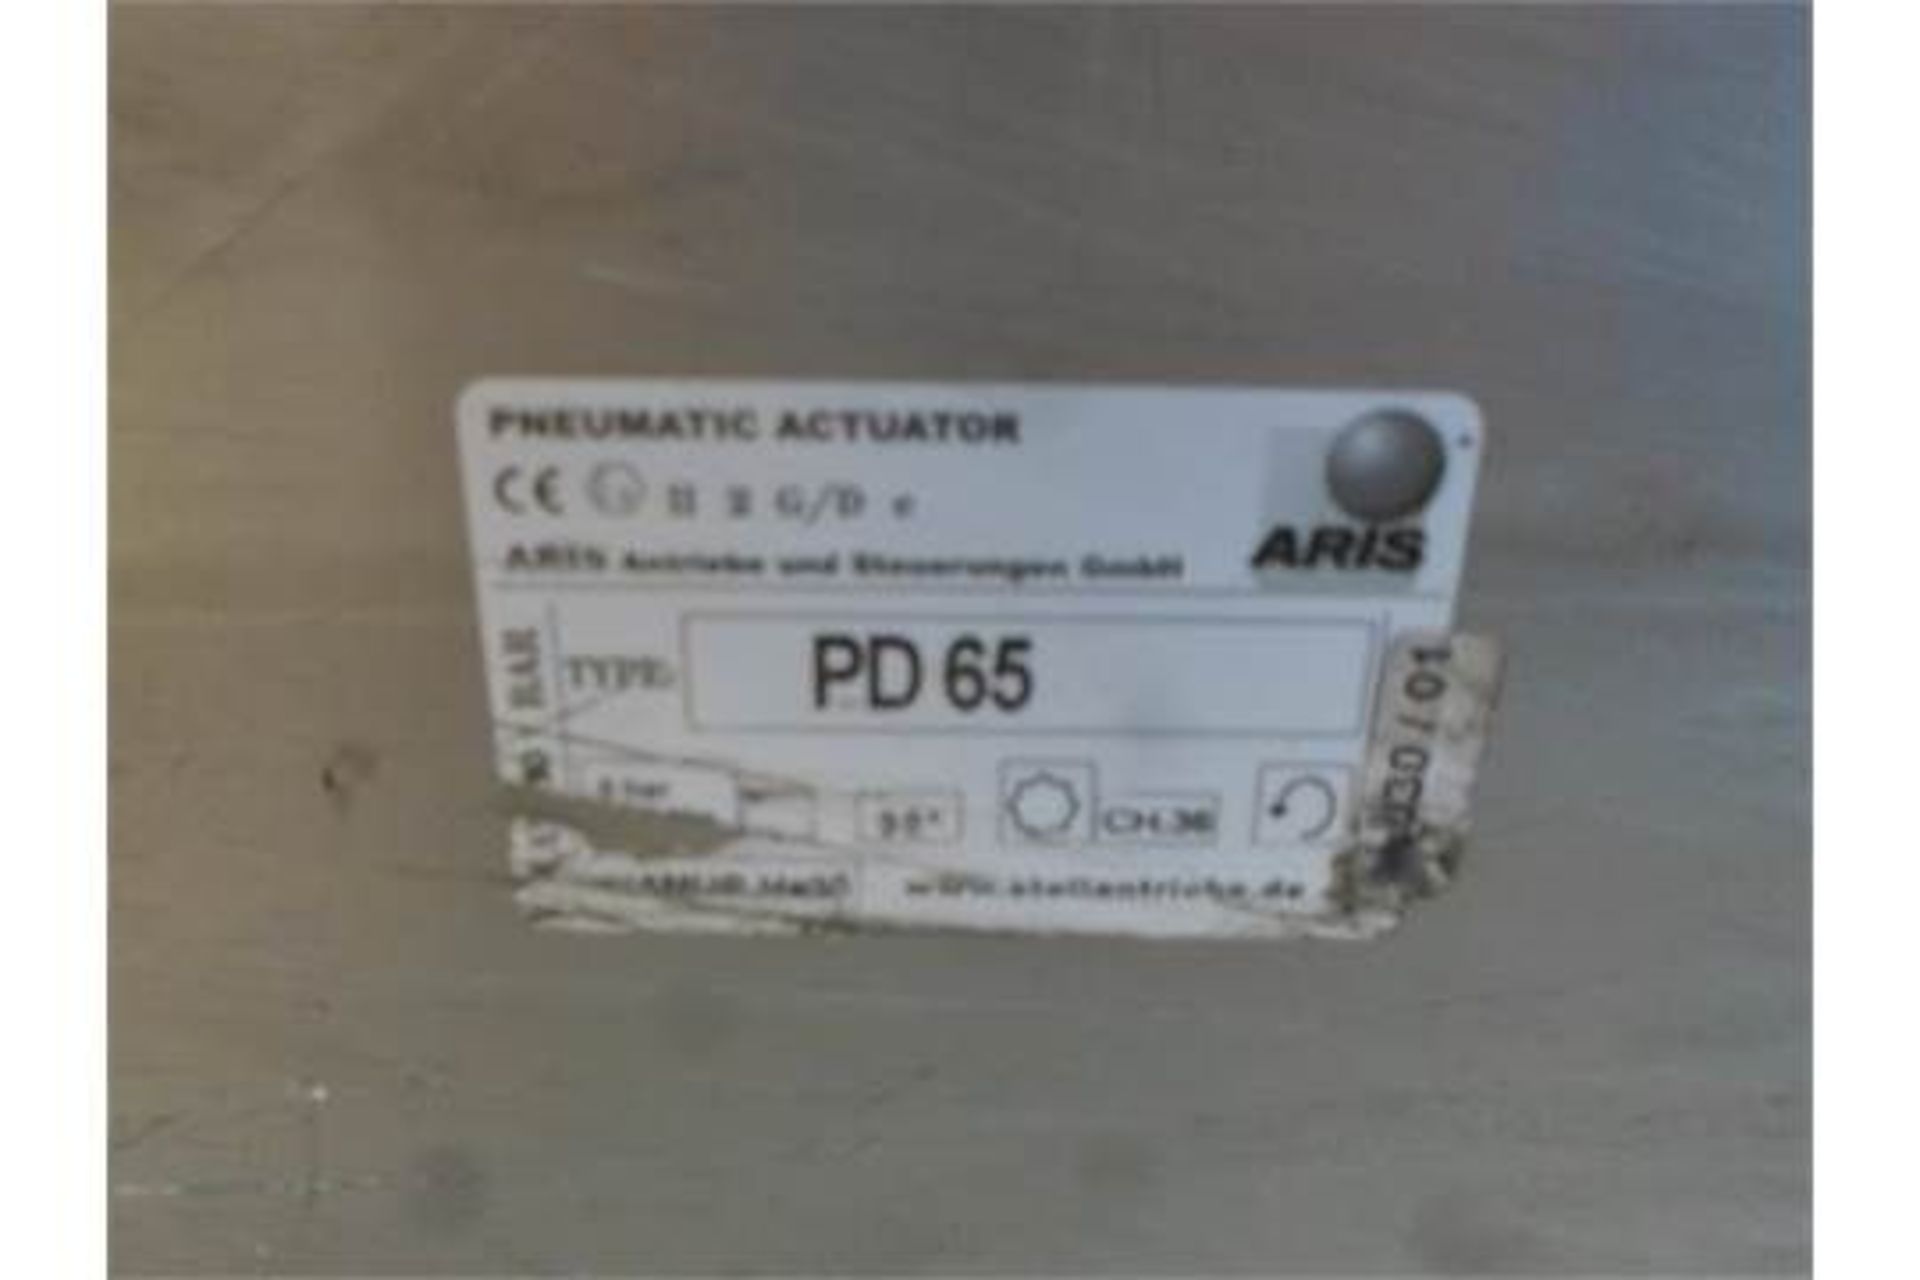 UNUSED ARIS Pneumatic Rotary Valve Actuator PD 65 Position Indicator - Image 2 of 2